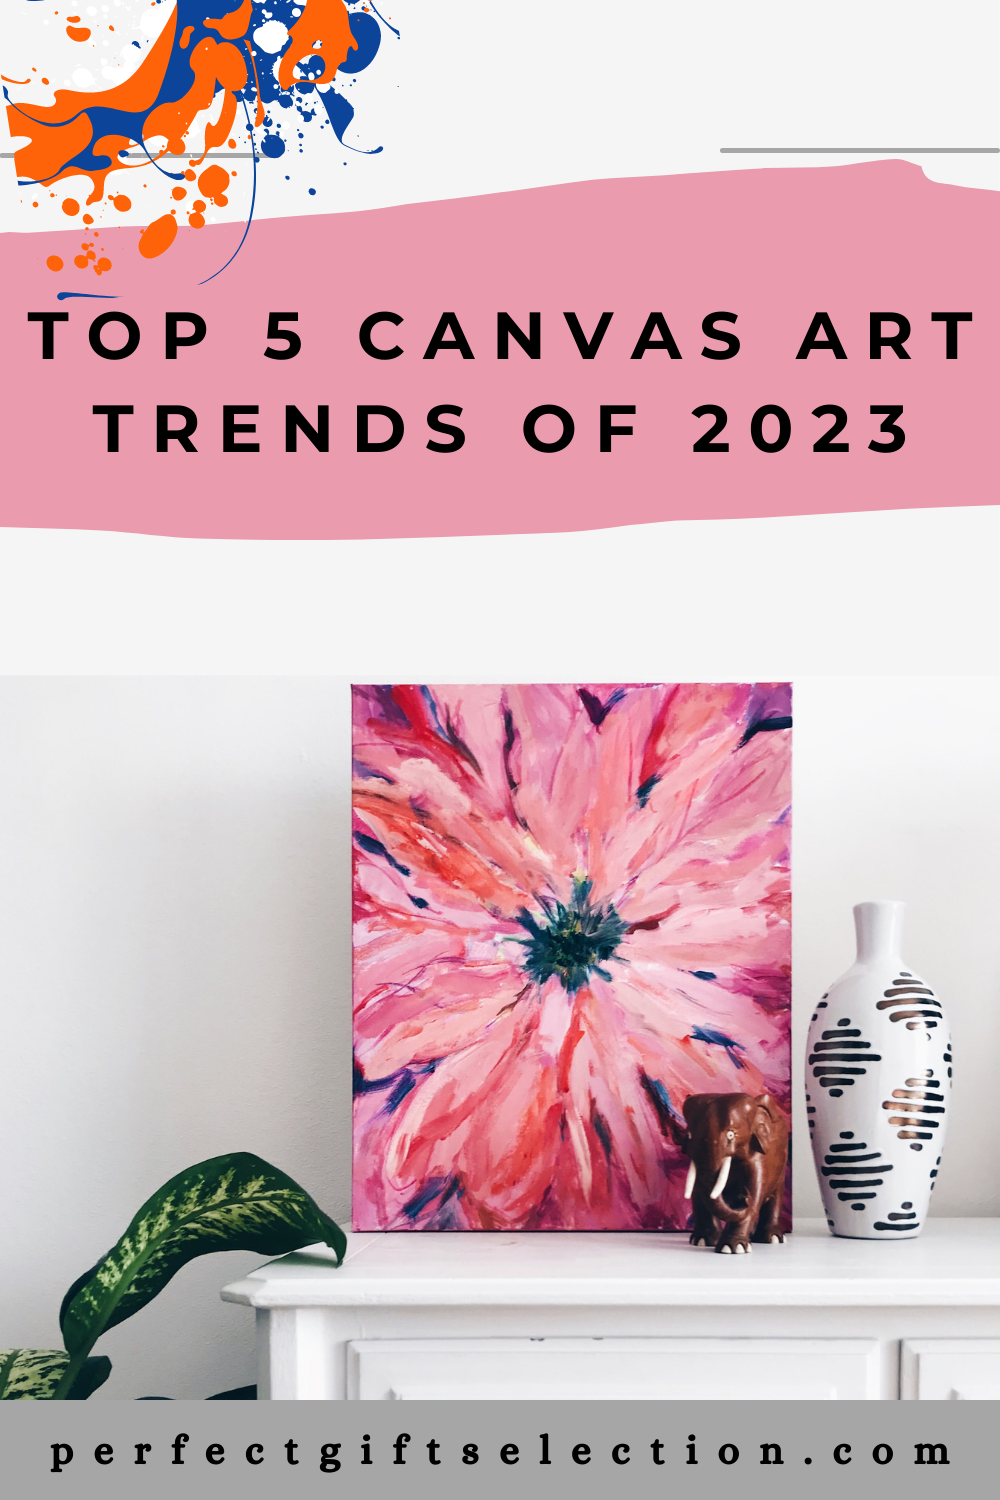 Top 5 Canvas Art Trends of 2023